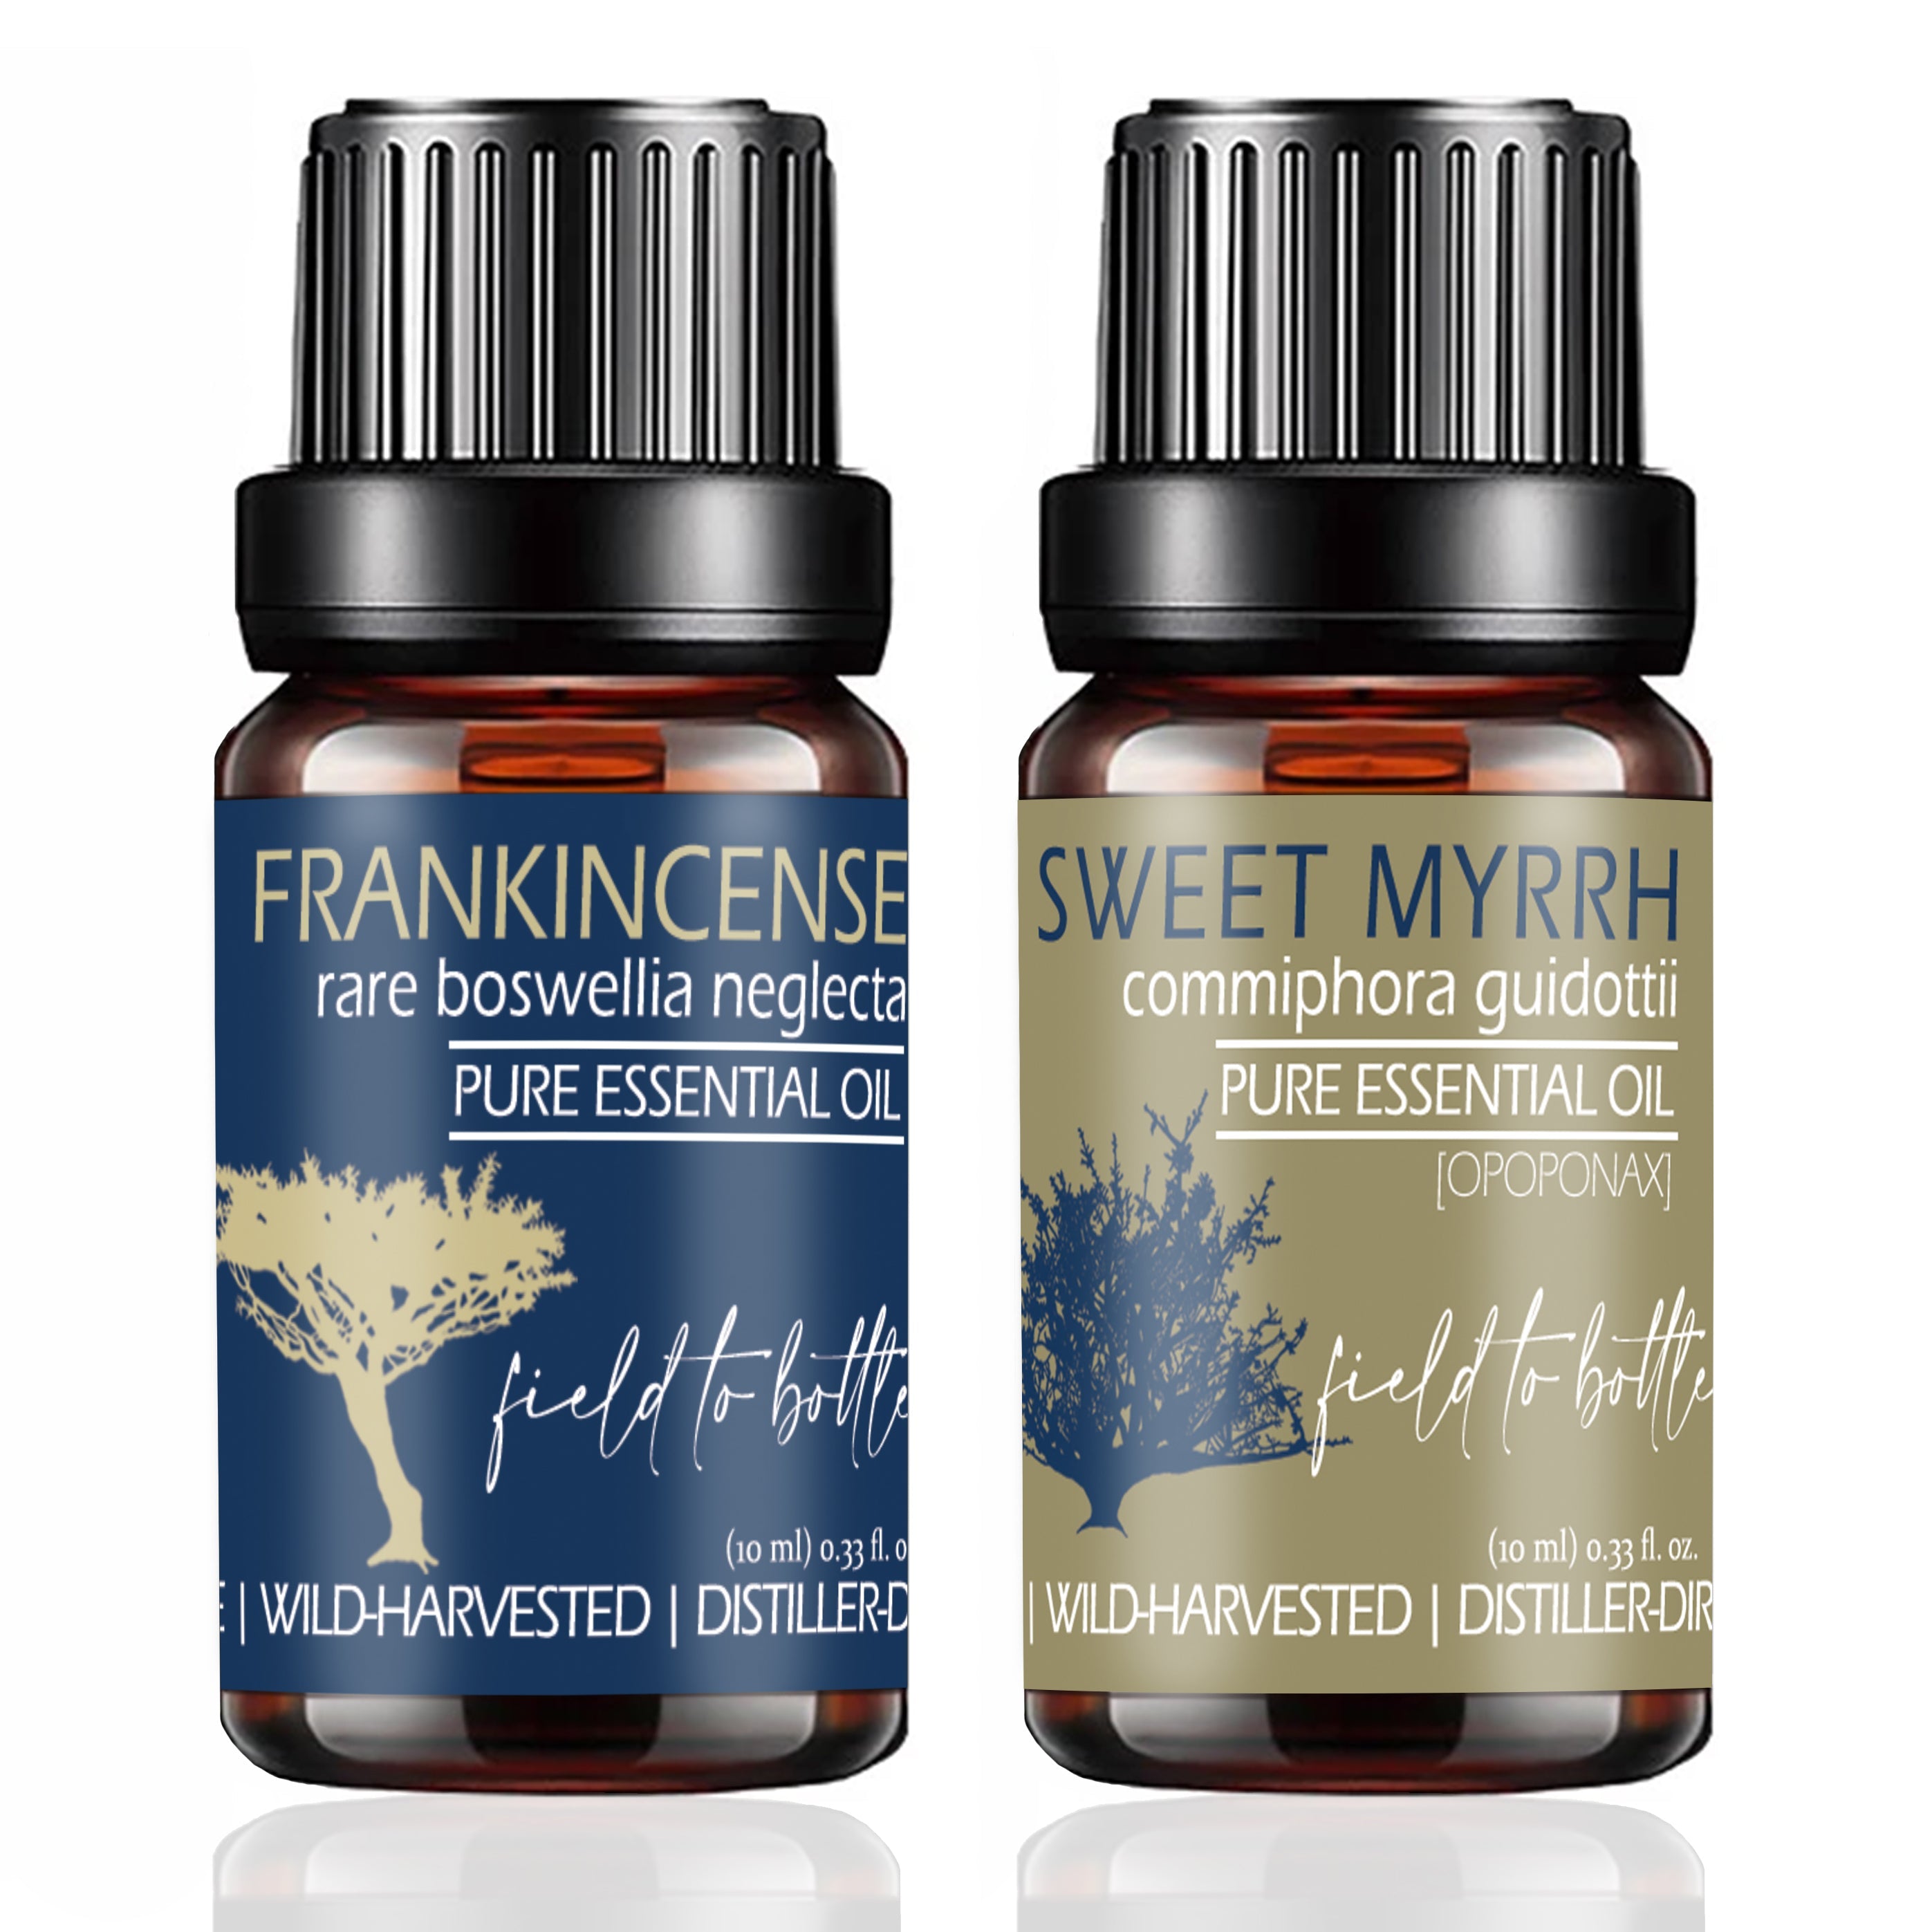 Frankincense & Myrrh Pure Essential Oil Blend - Essential Oils